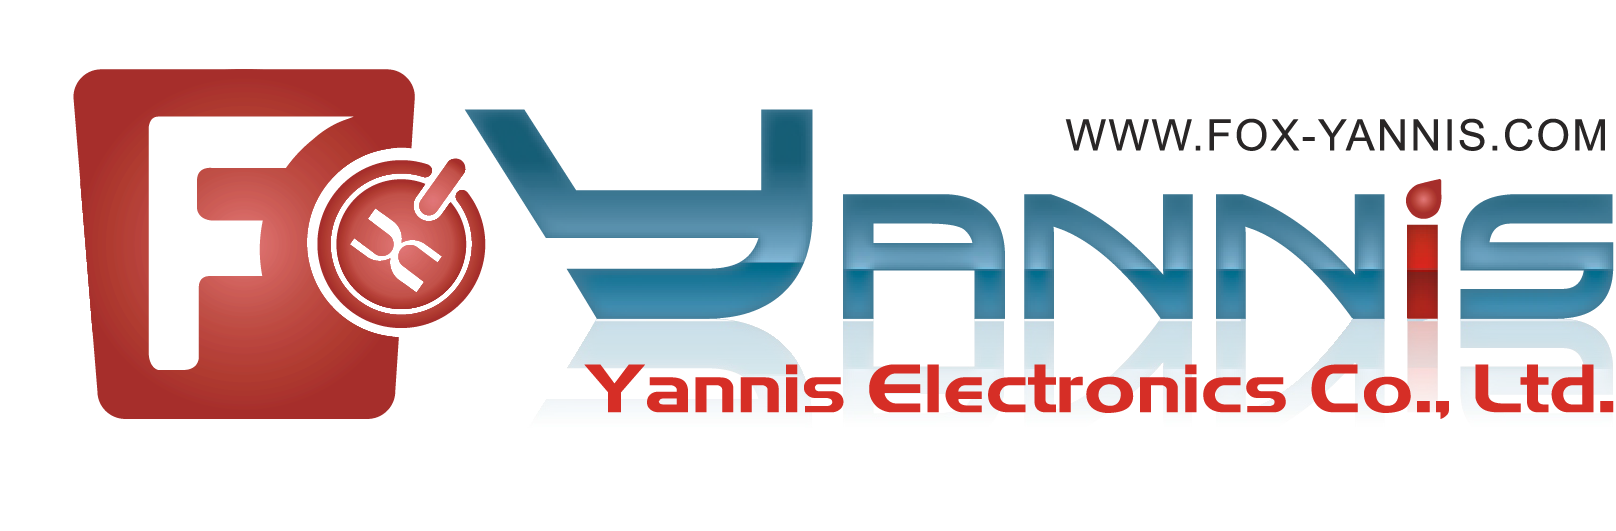 YANNIS ELECTRONICS CO., LTD.